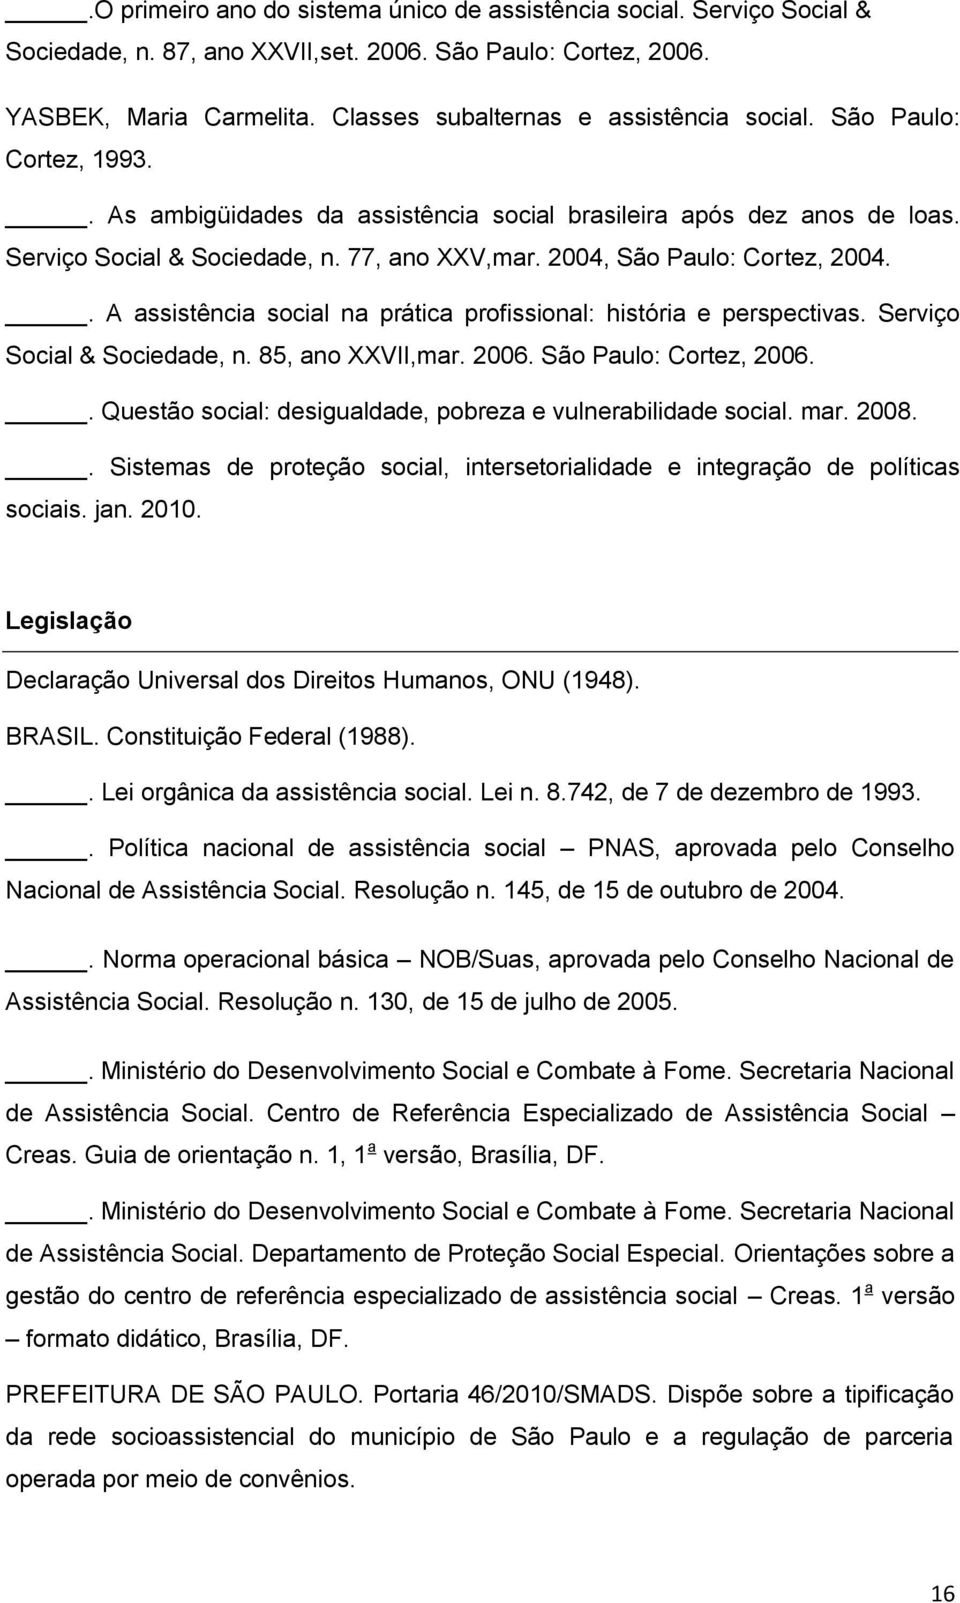 2004, São Paulo: Cortez, 2004.. A assistência social na prática profissional: história e perspectivas. Serviço Social & Sociedade, n. 85, ano XXVII,mar. 2006. São Paulo: Cortez, 2006.